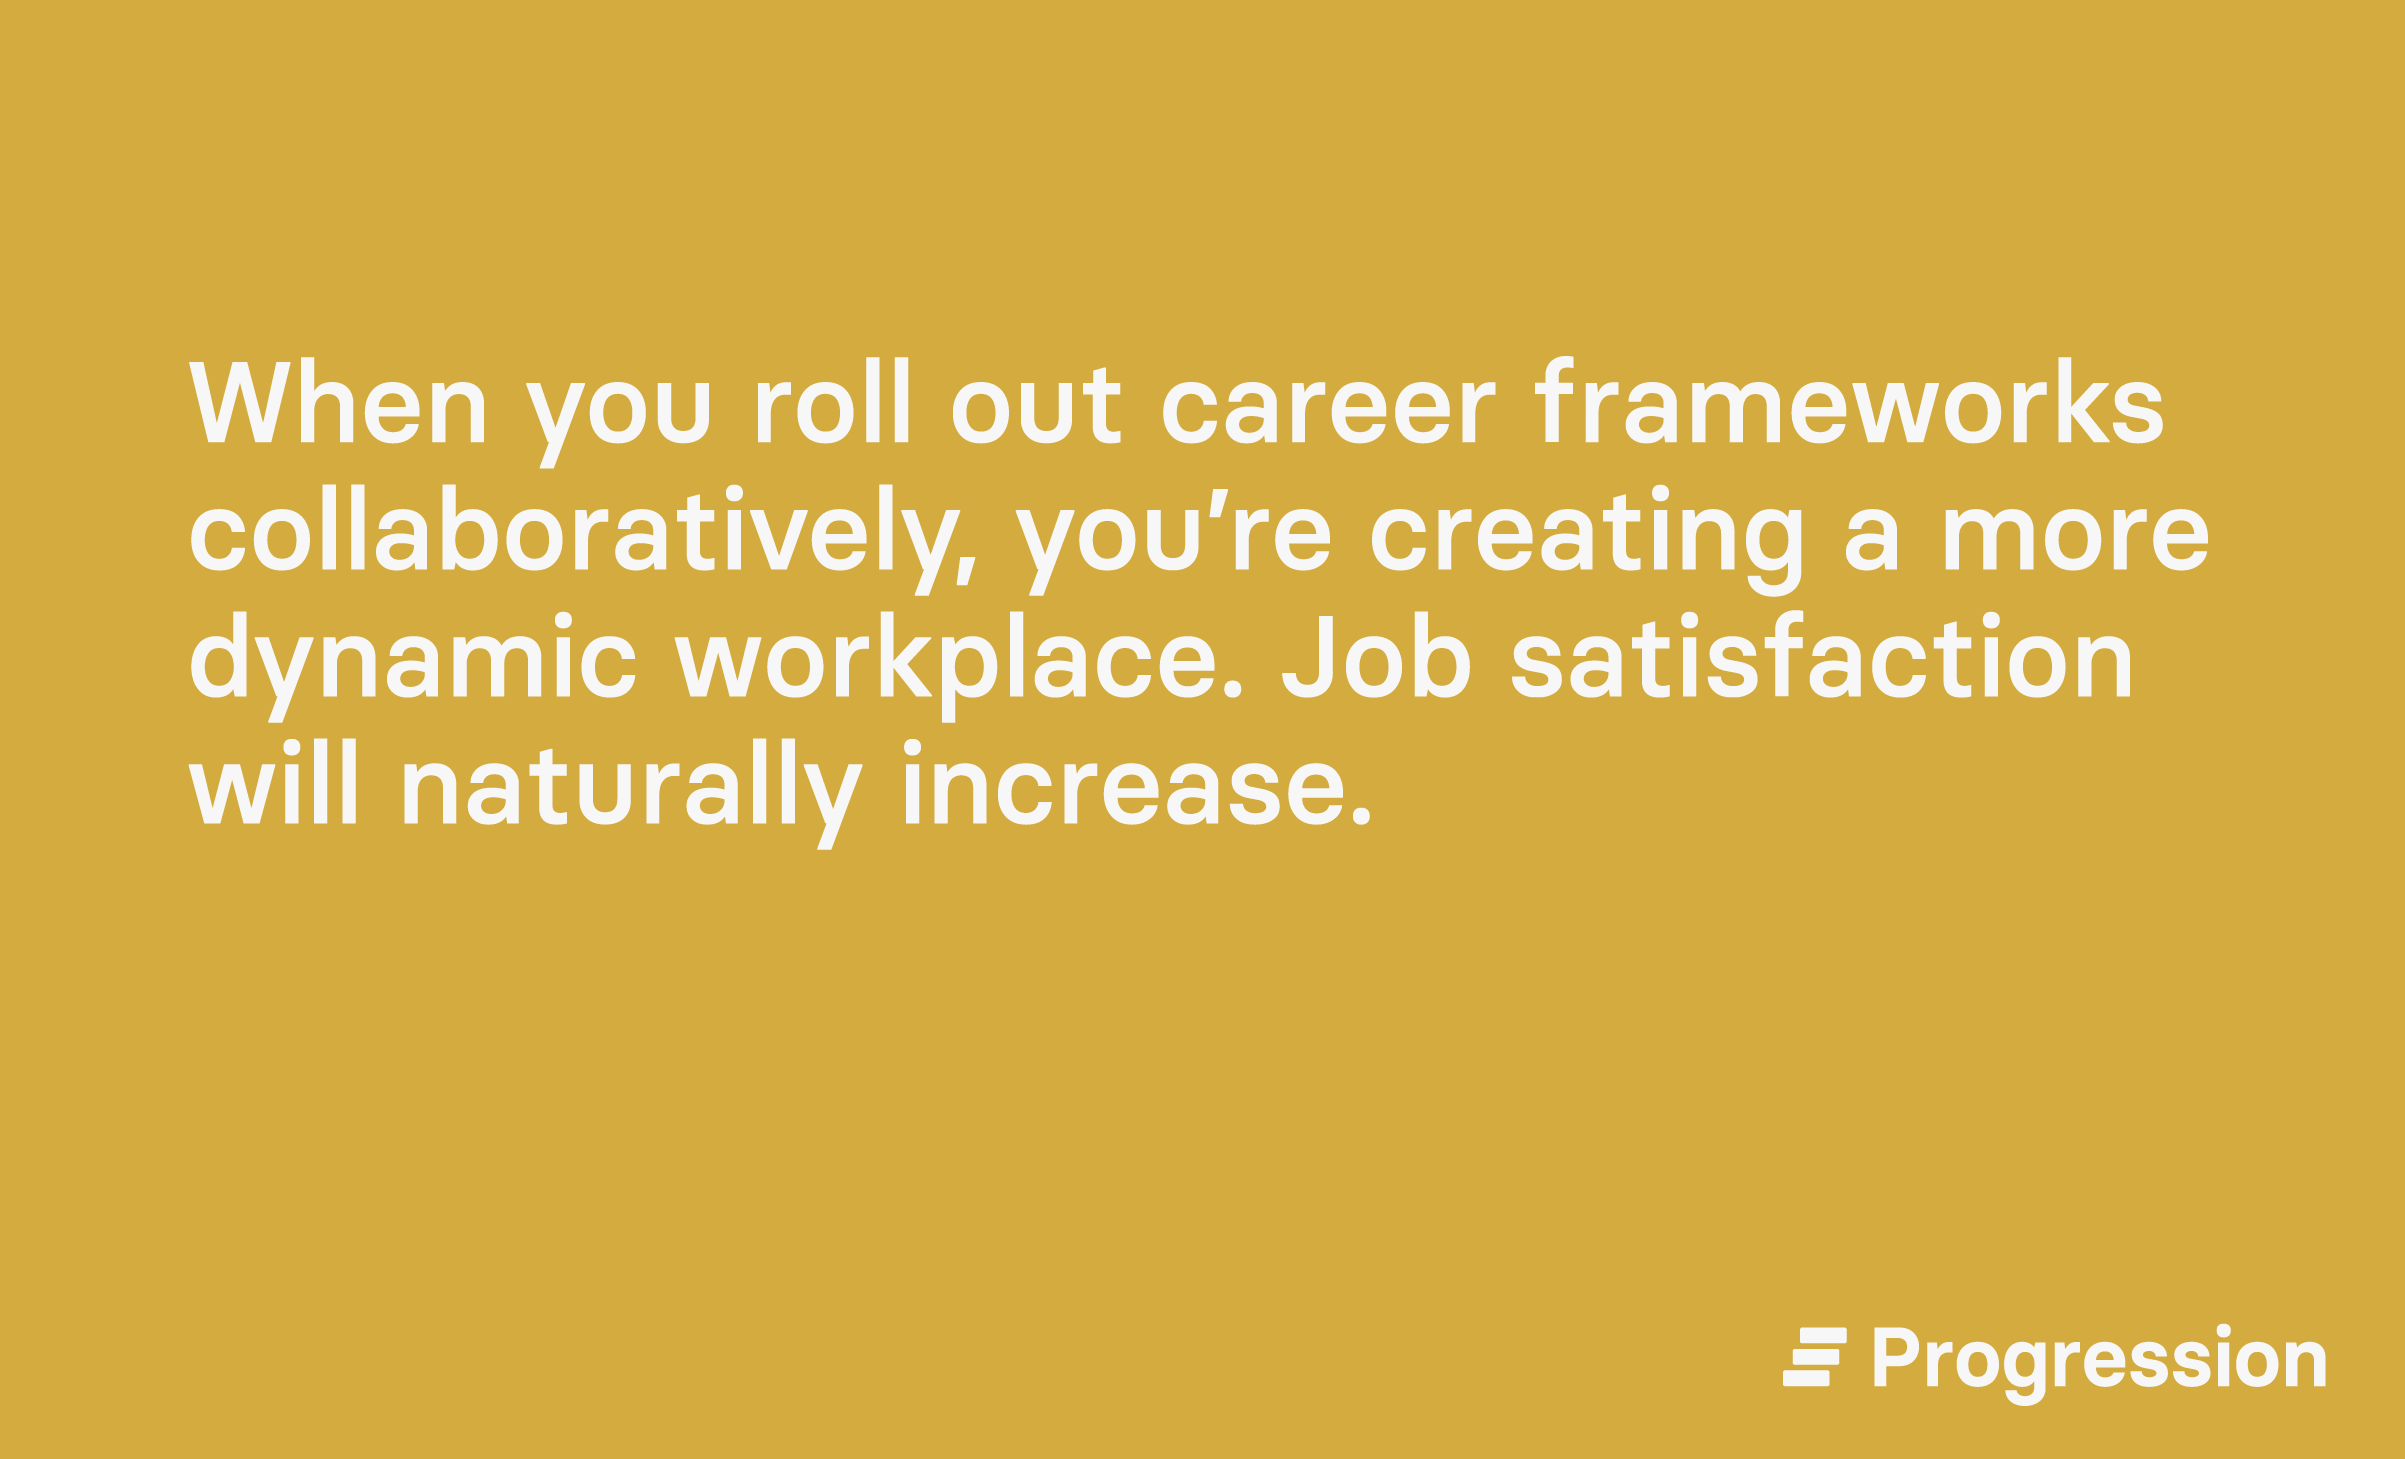 Graphic highlighting how career frameworks help increase job satisfaction